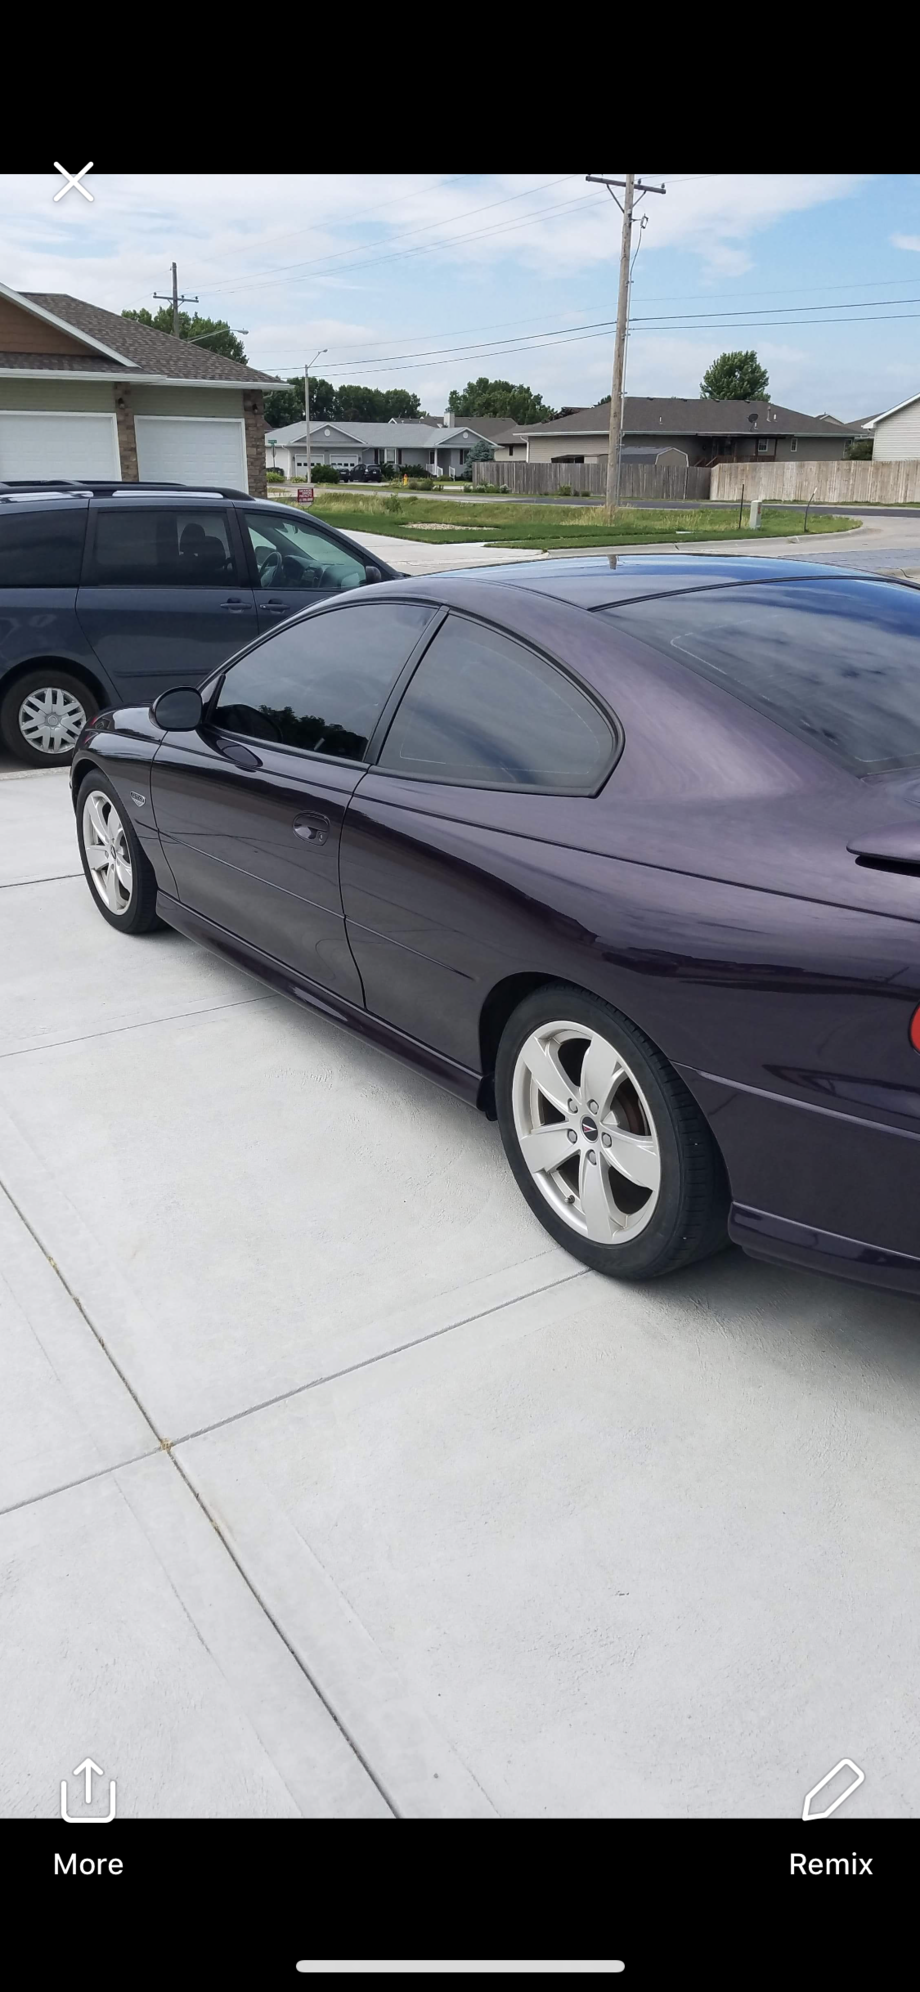 2004 Pontiac GTO - 2004 cosmos purple gto 6 speed - Used - VIN 6g2vx12g34l267565 - 75,000 Miles - 8 cyl - 2WD - Manual - Coupe - Purple - Grand Island, NE 68803, United States